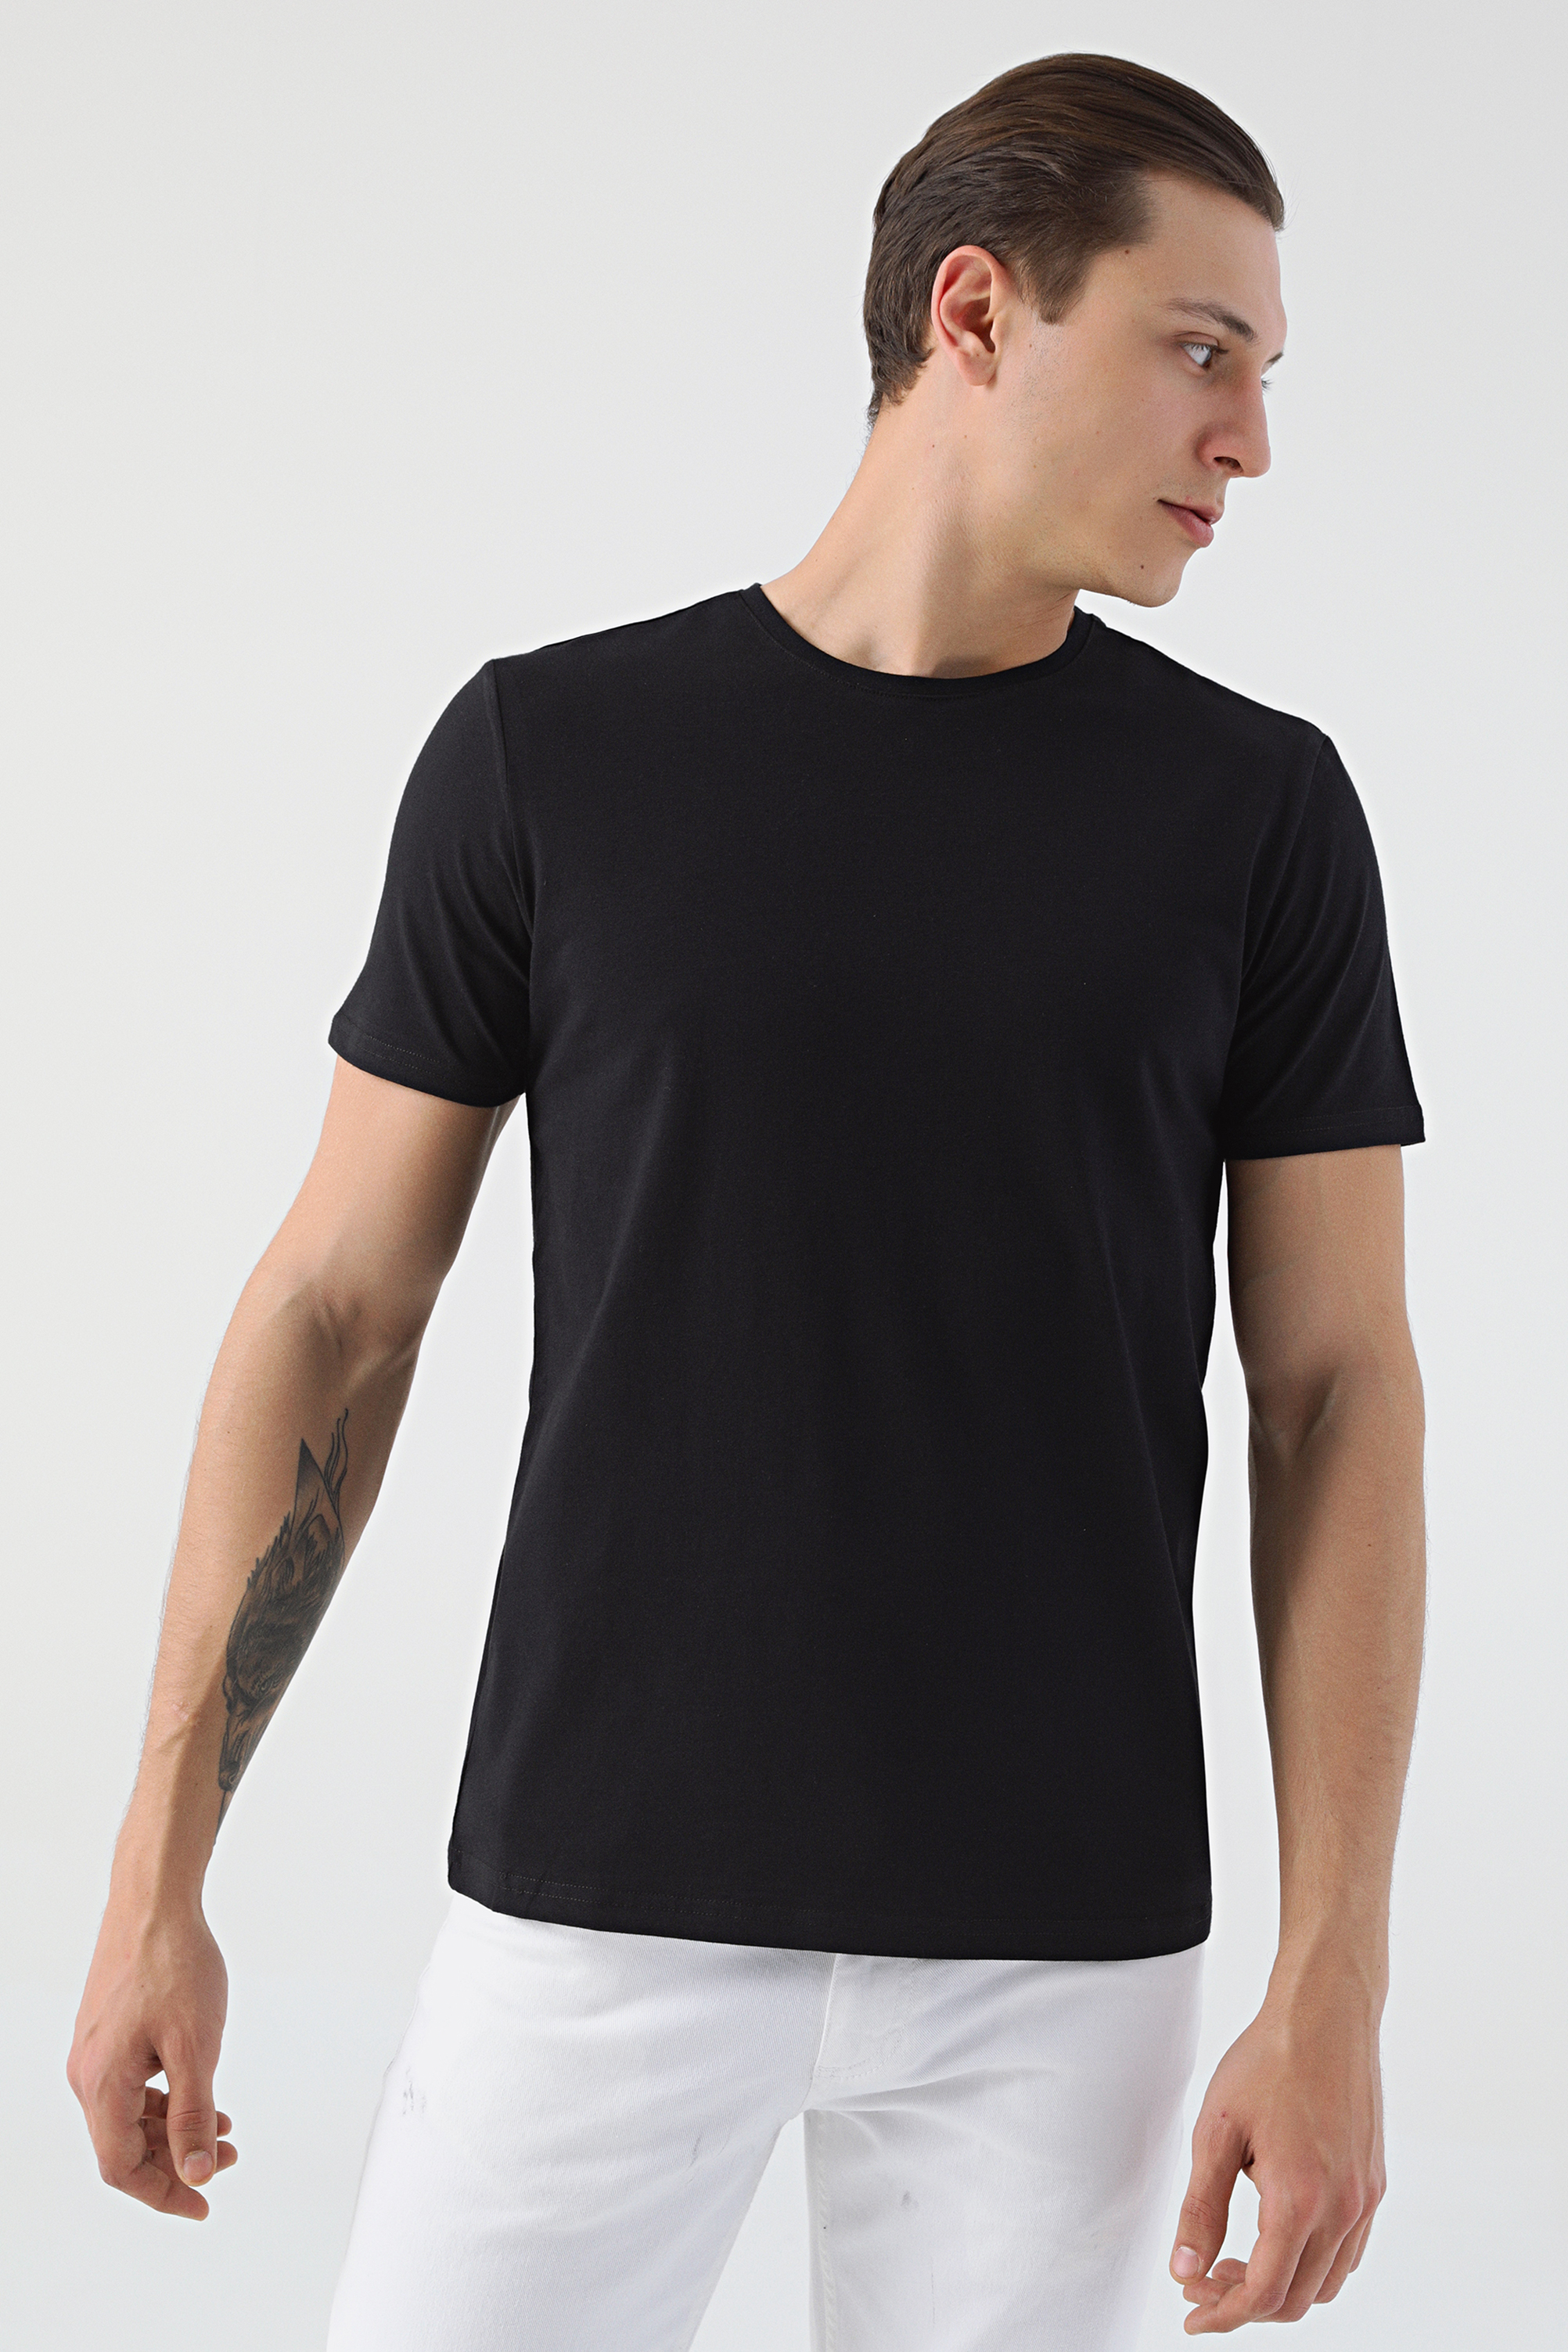 Damat Tween Tween Siyah T-shirt. 2